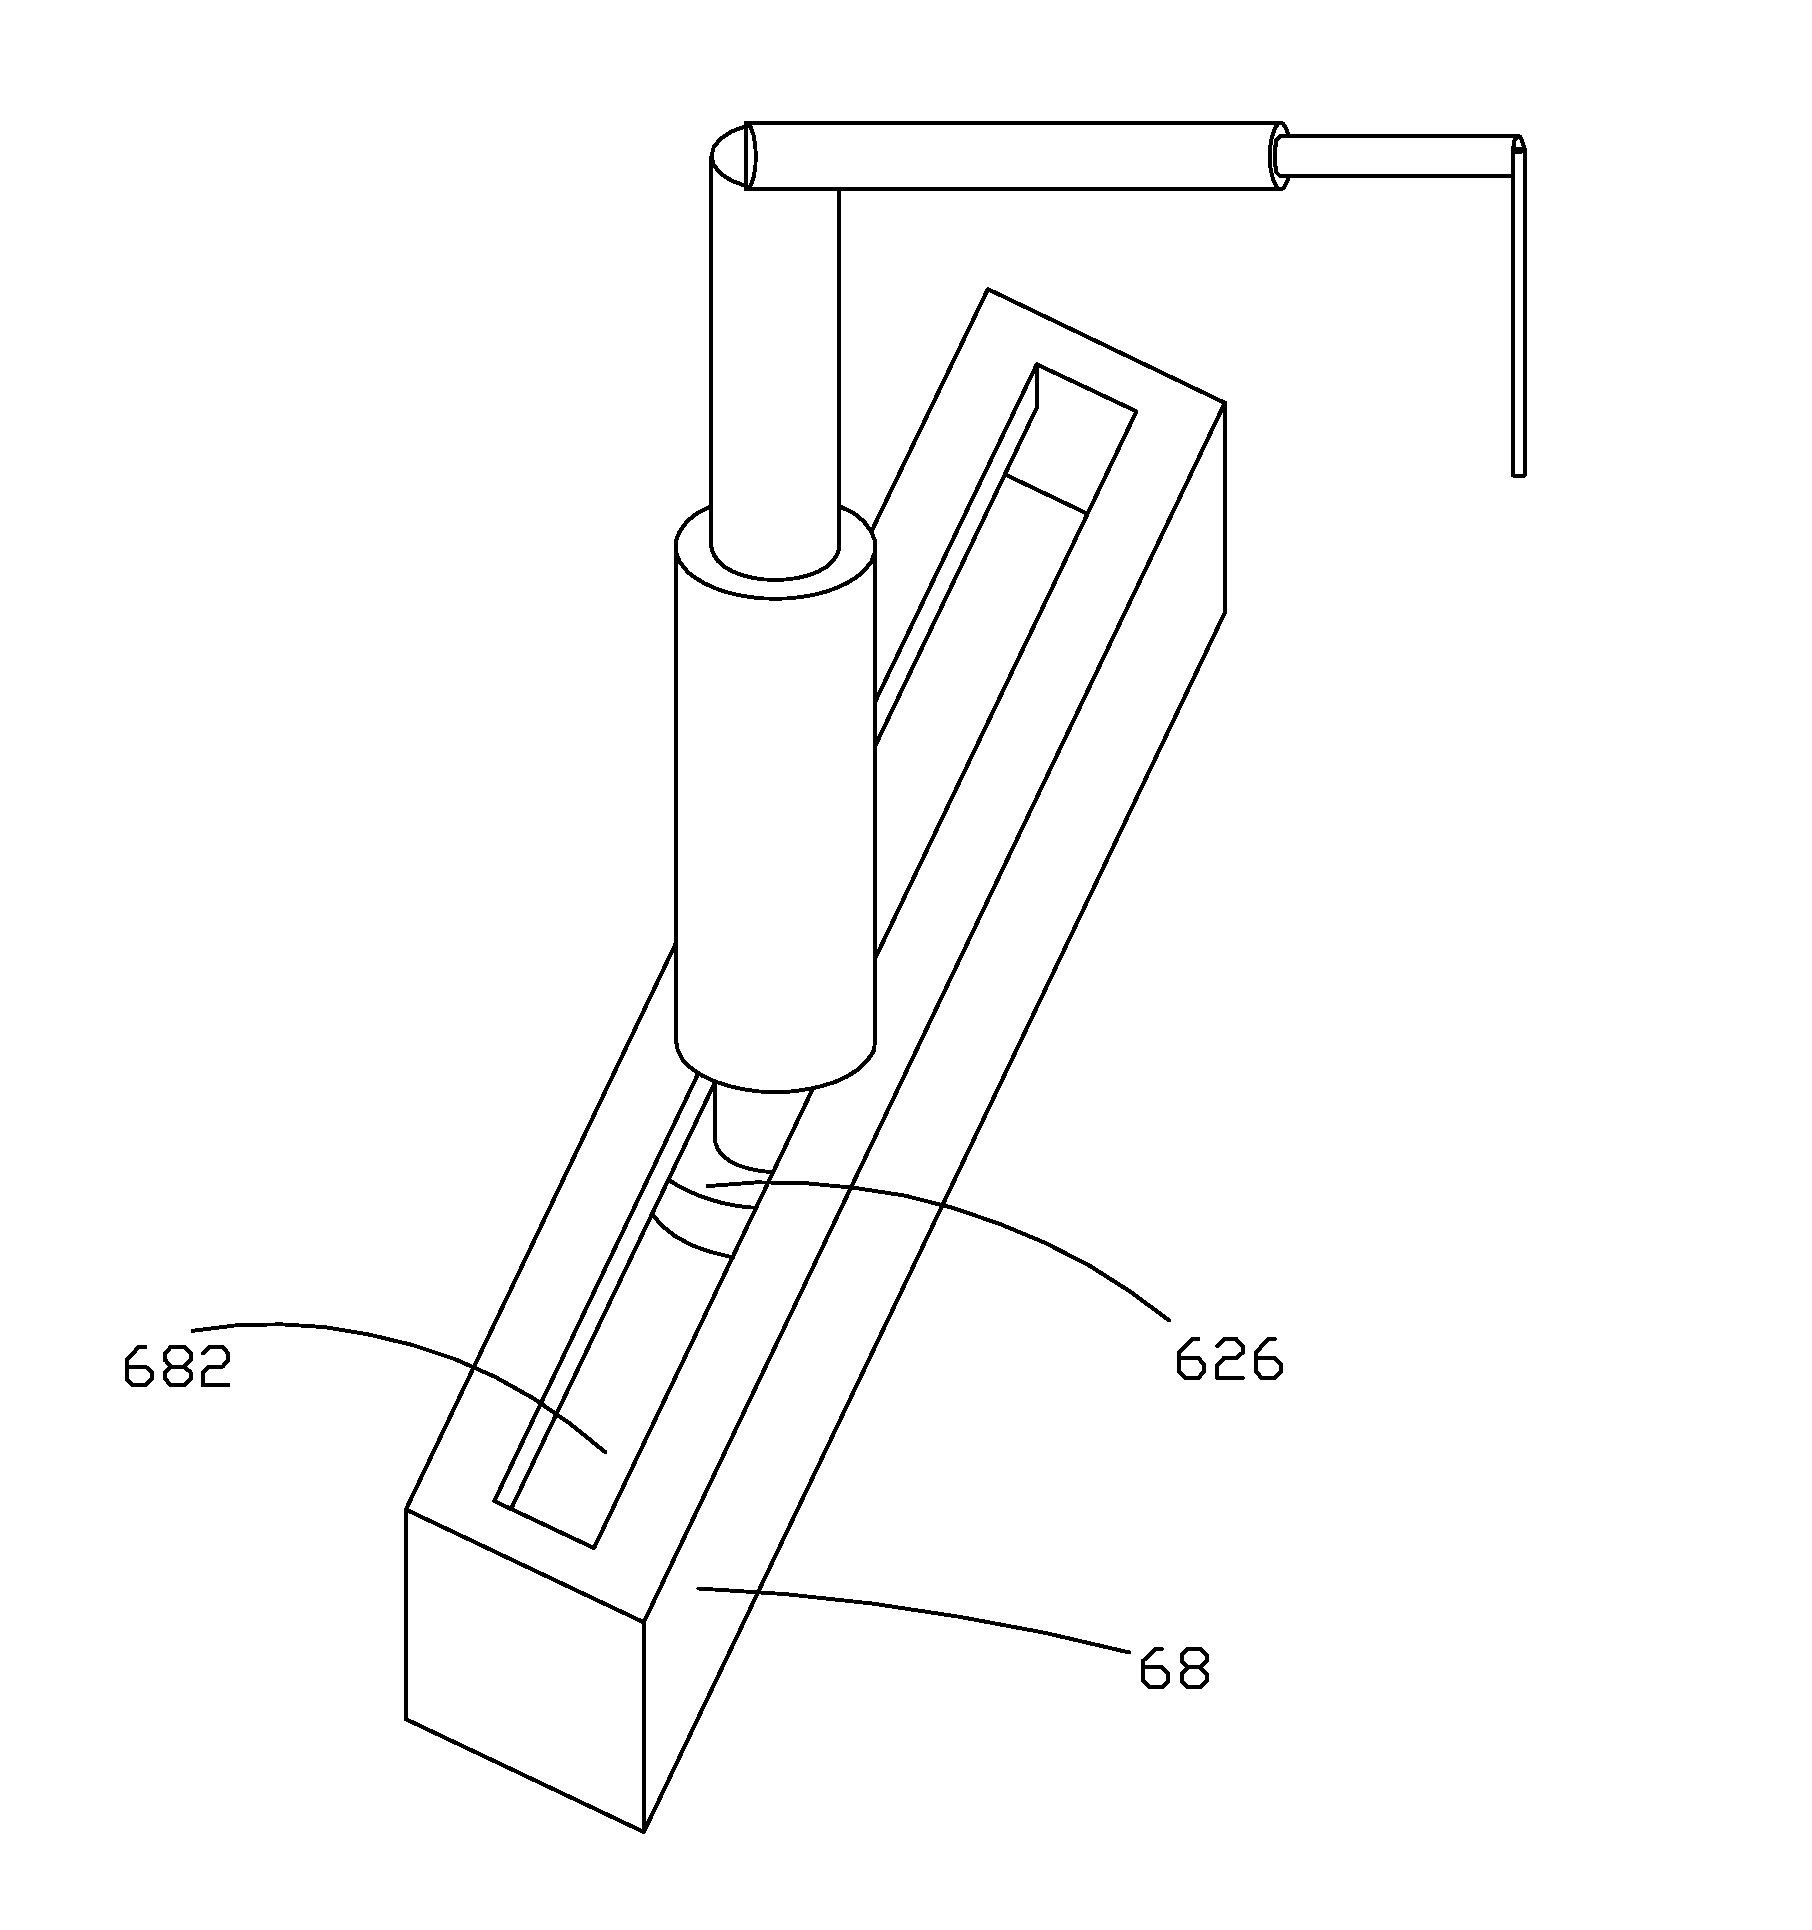 Vaporization source assembly of OLED vapor deposition machine